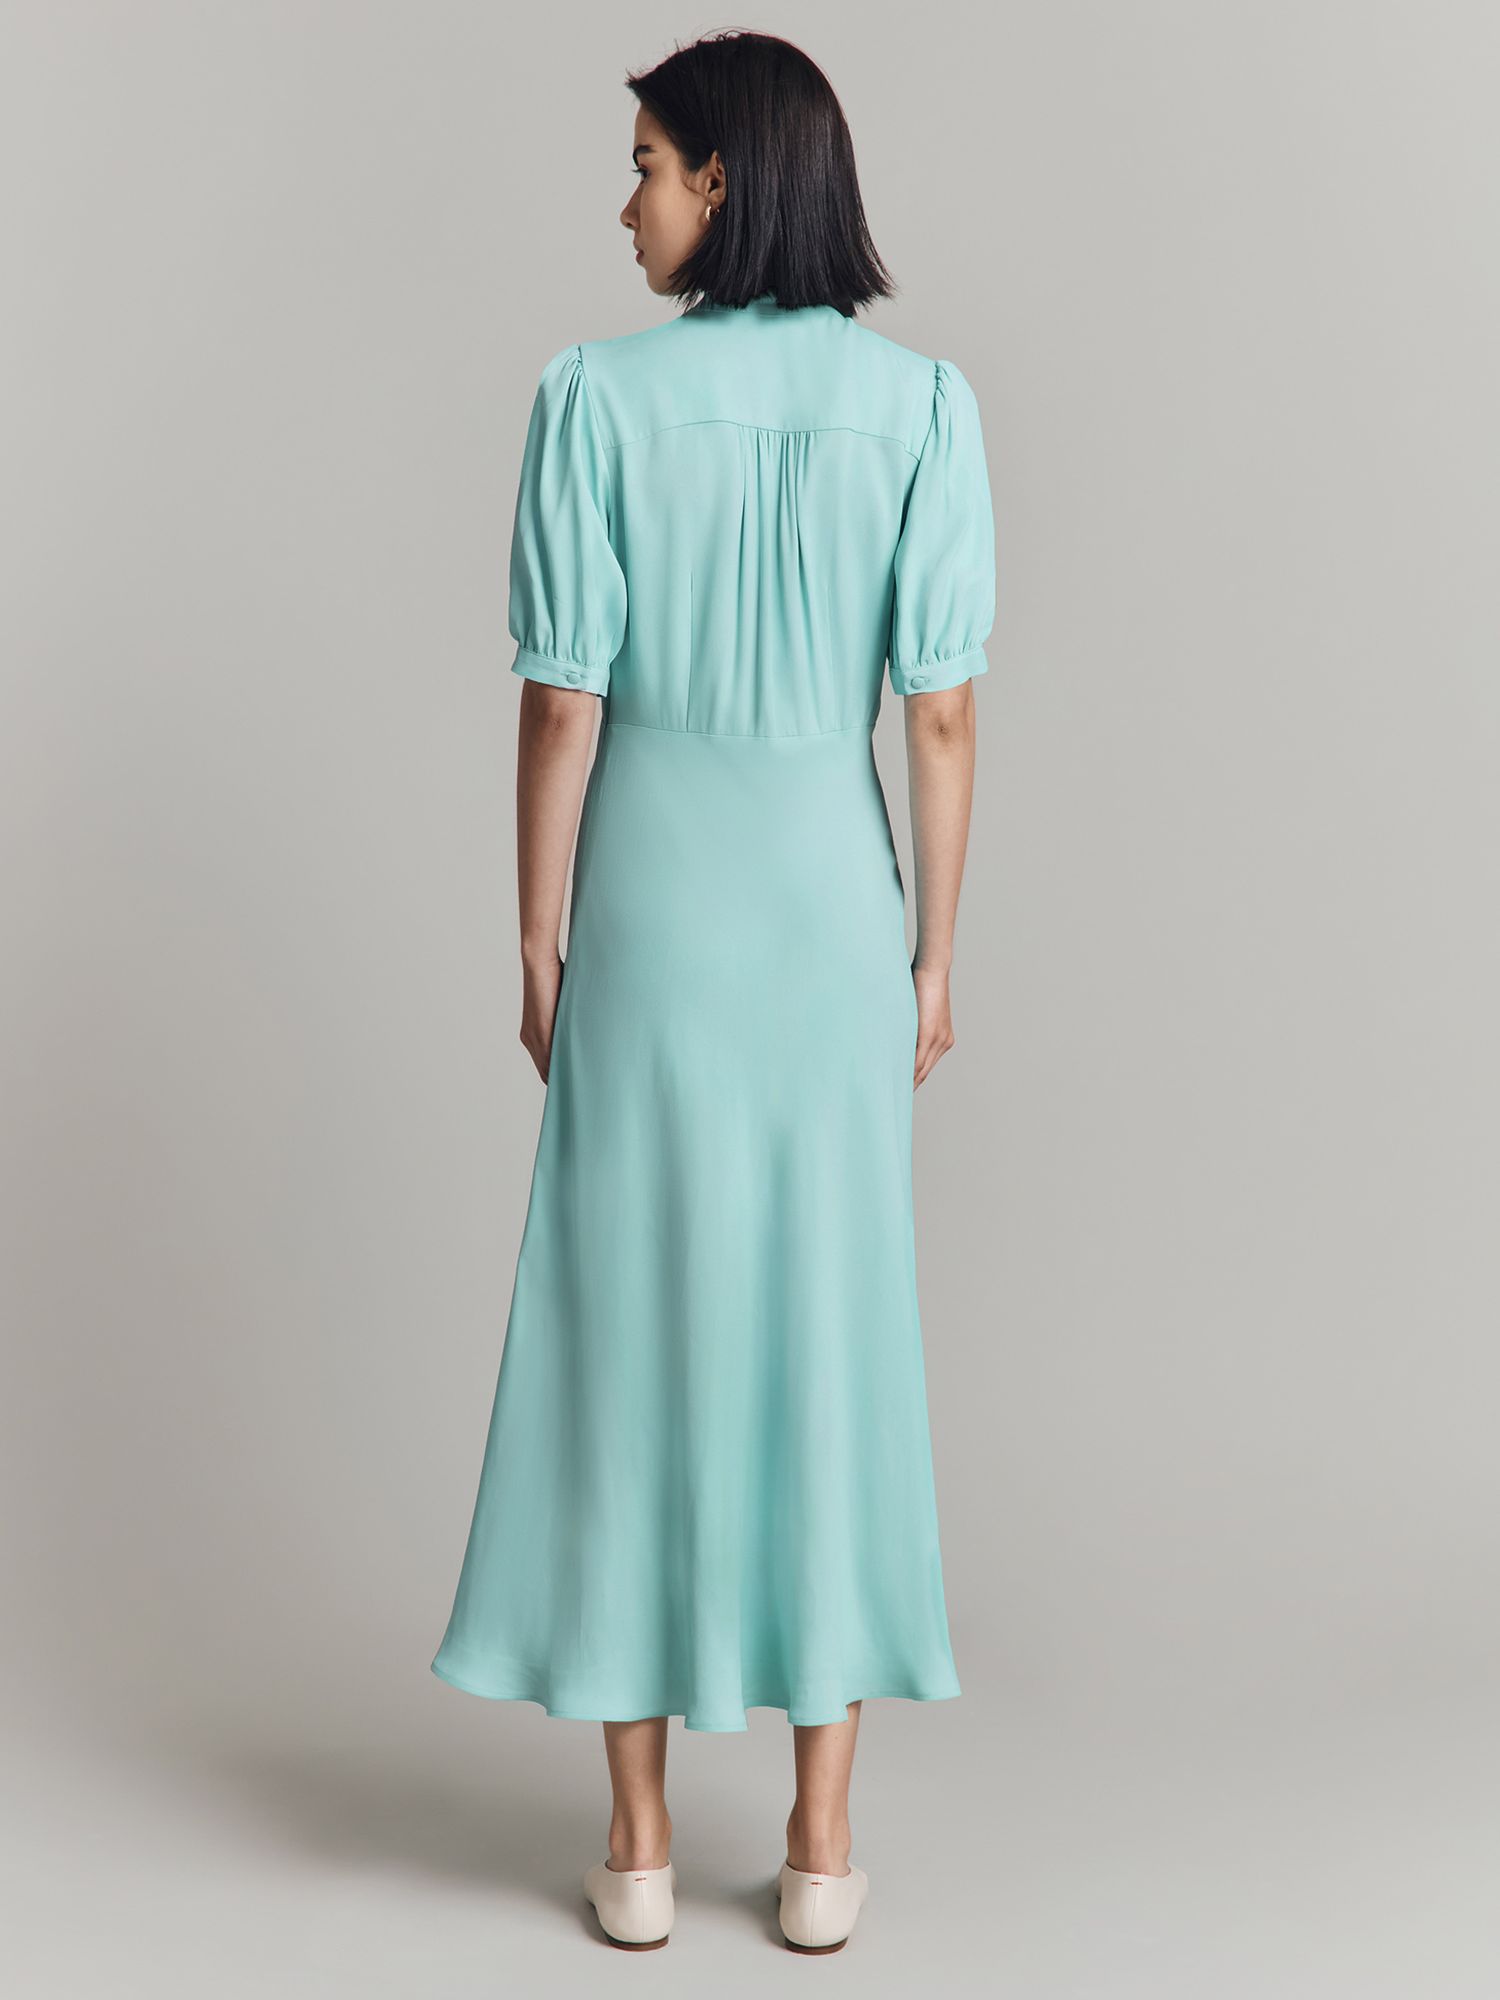 Ghost Adele Puff Sleeve Crepe Midaxi Dress, Light Blue, XS